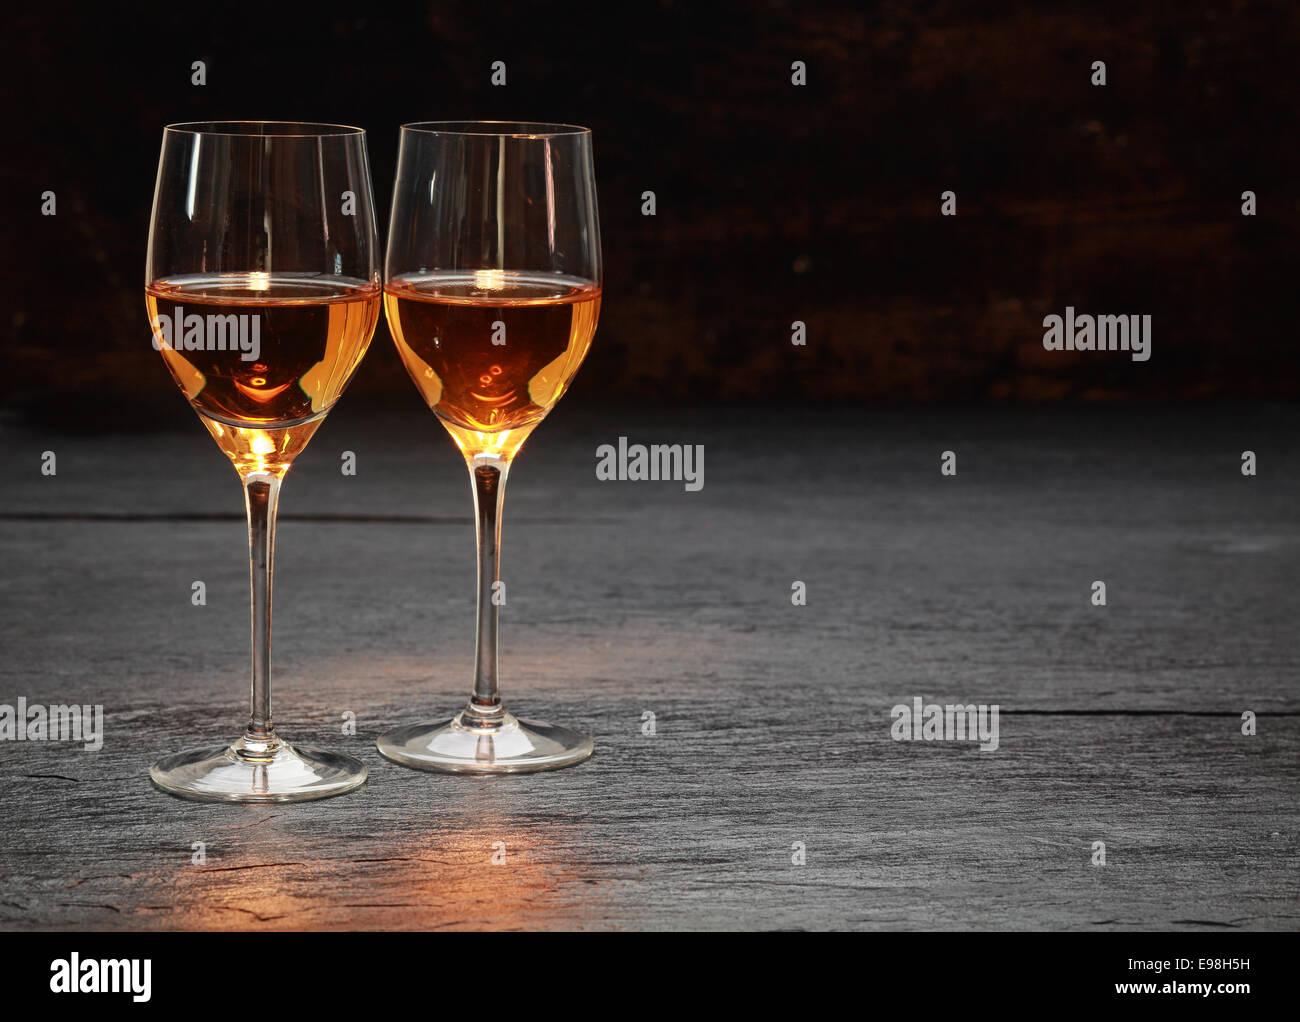 Pair of half-full half-empty wine glasses on stone surface Stock Photo